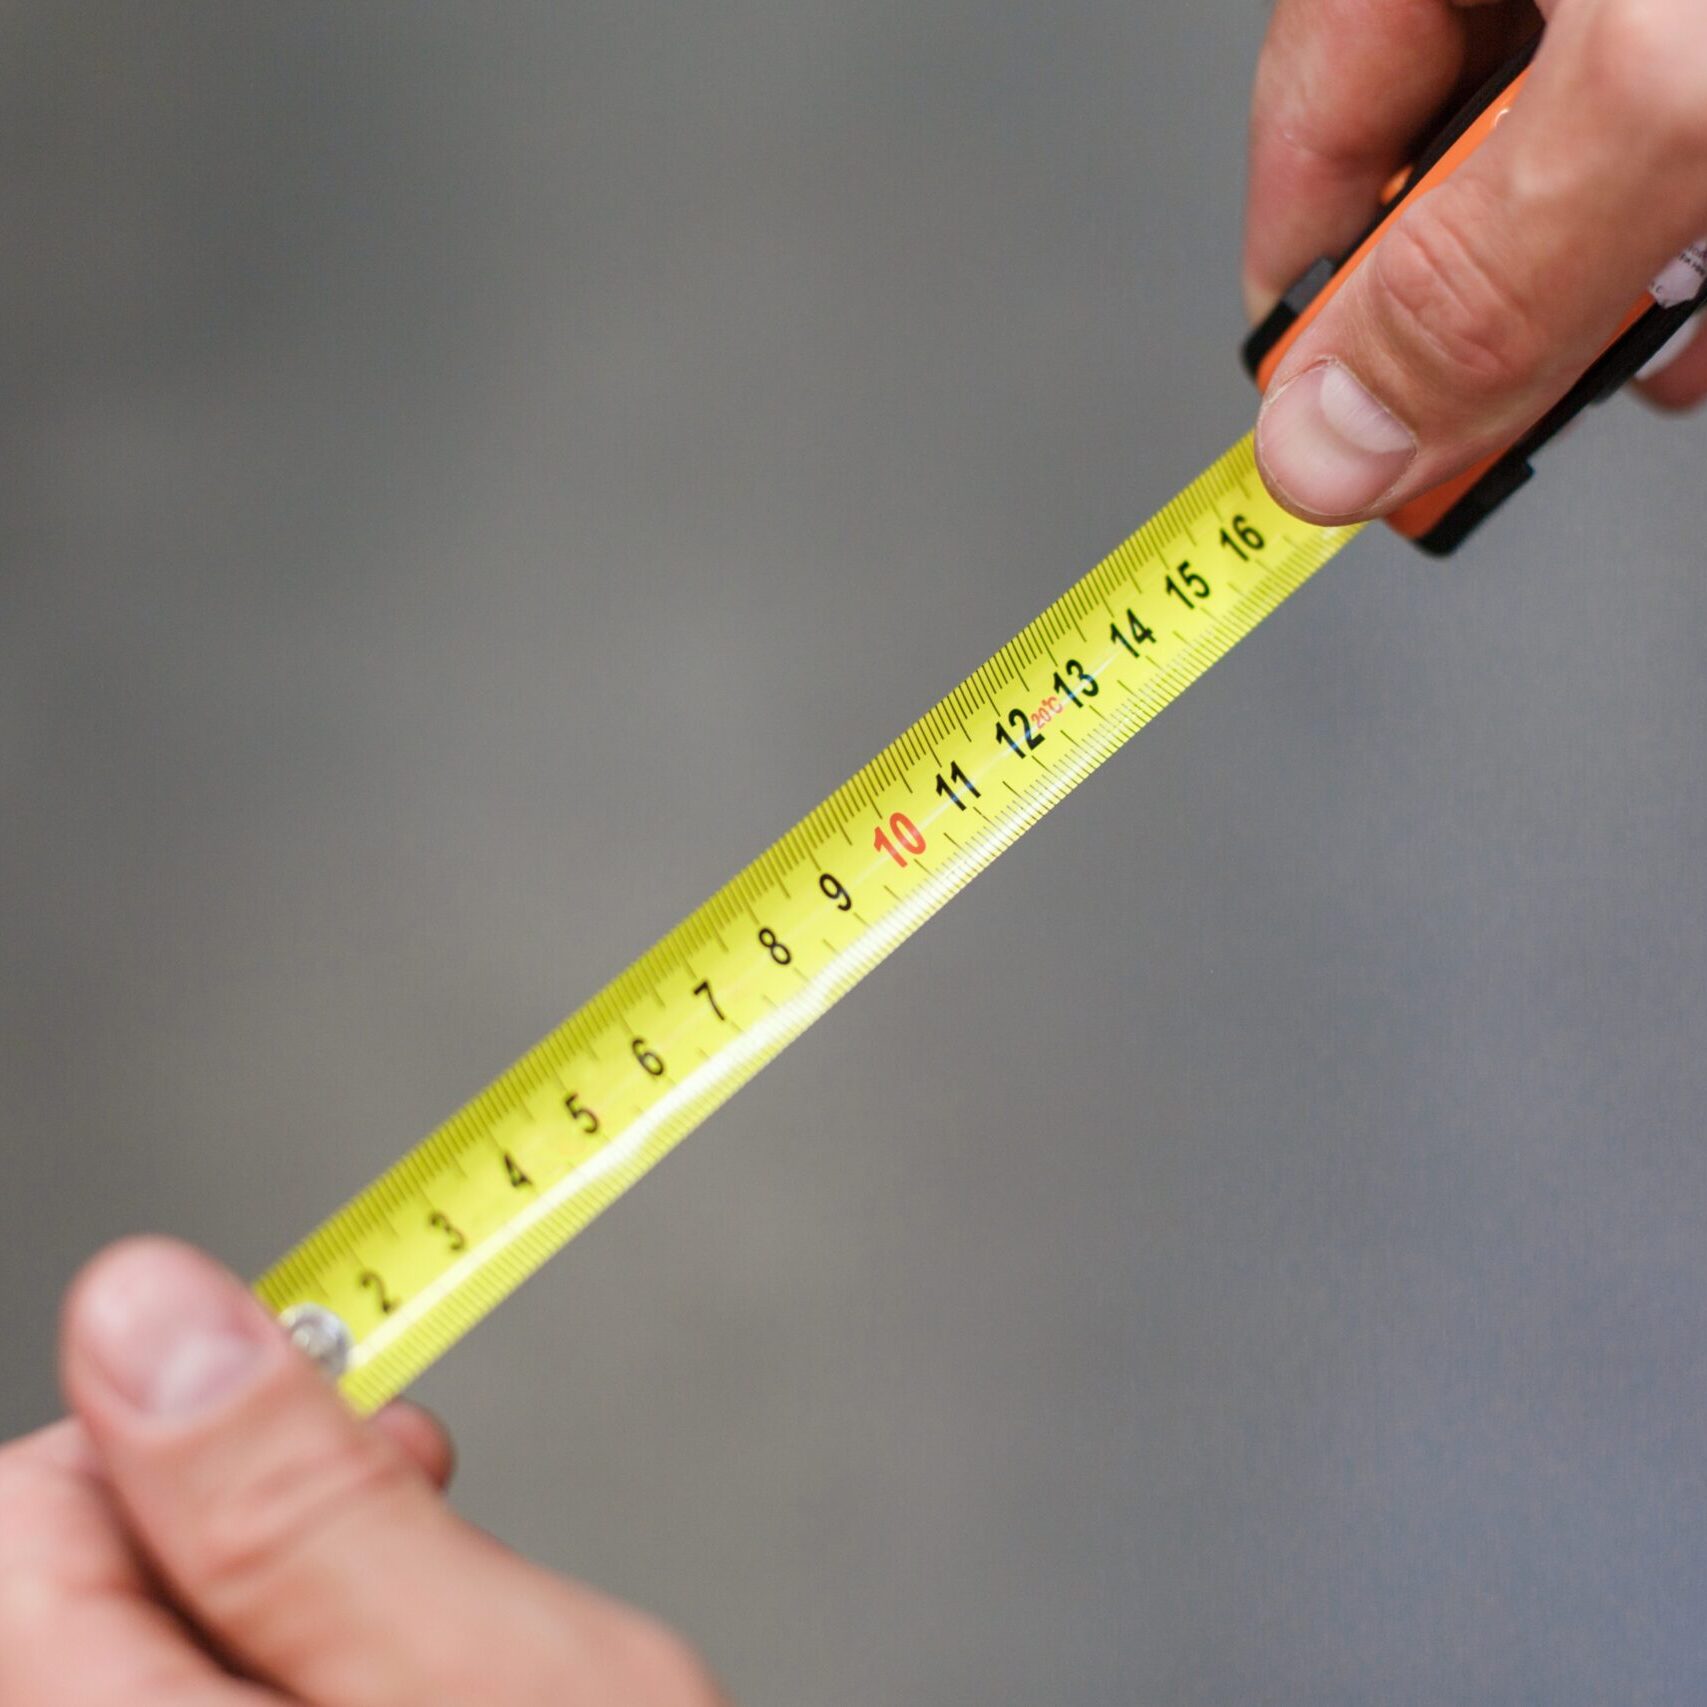 construction-tape-measurement-the-man-measures-w-2023-11-27-04-49-16-utc